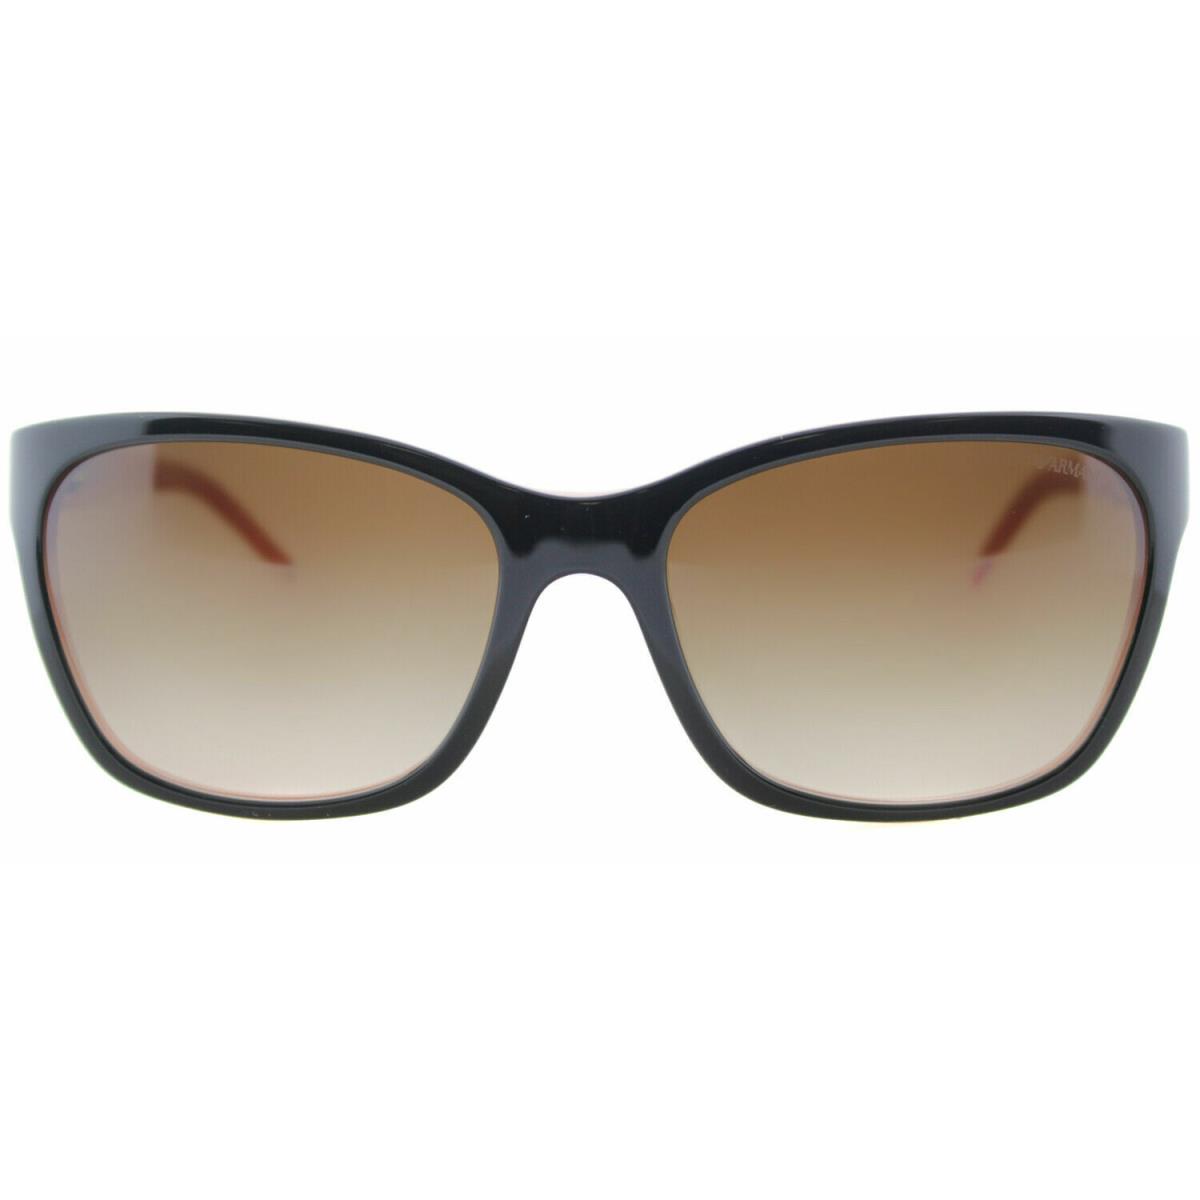 Giorgio Armani Sunglasses EA4004 5046/13 Black Opal Frames Brown Lens 56mm ST